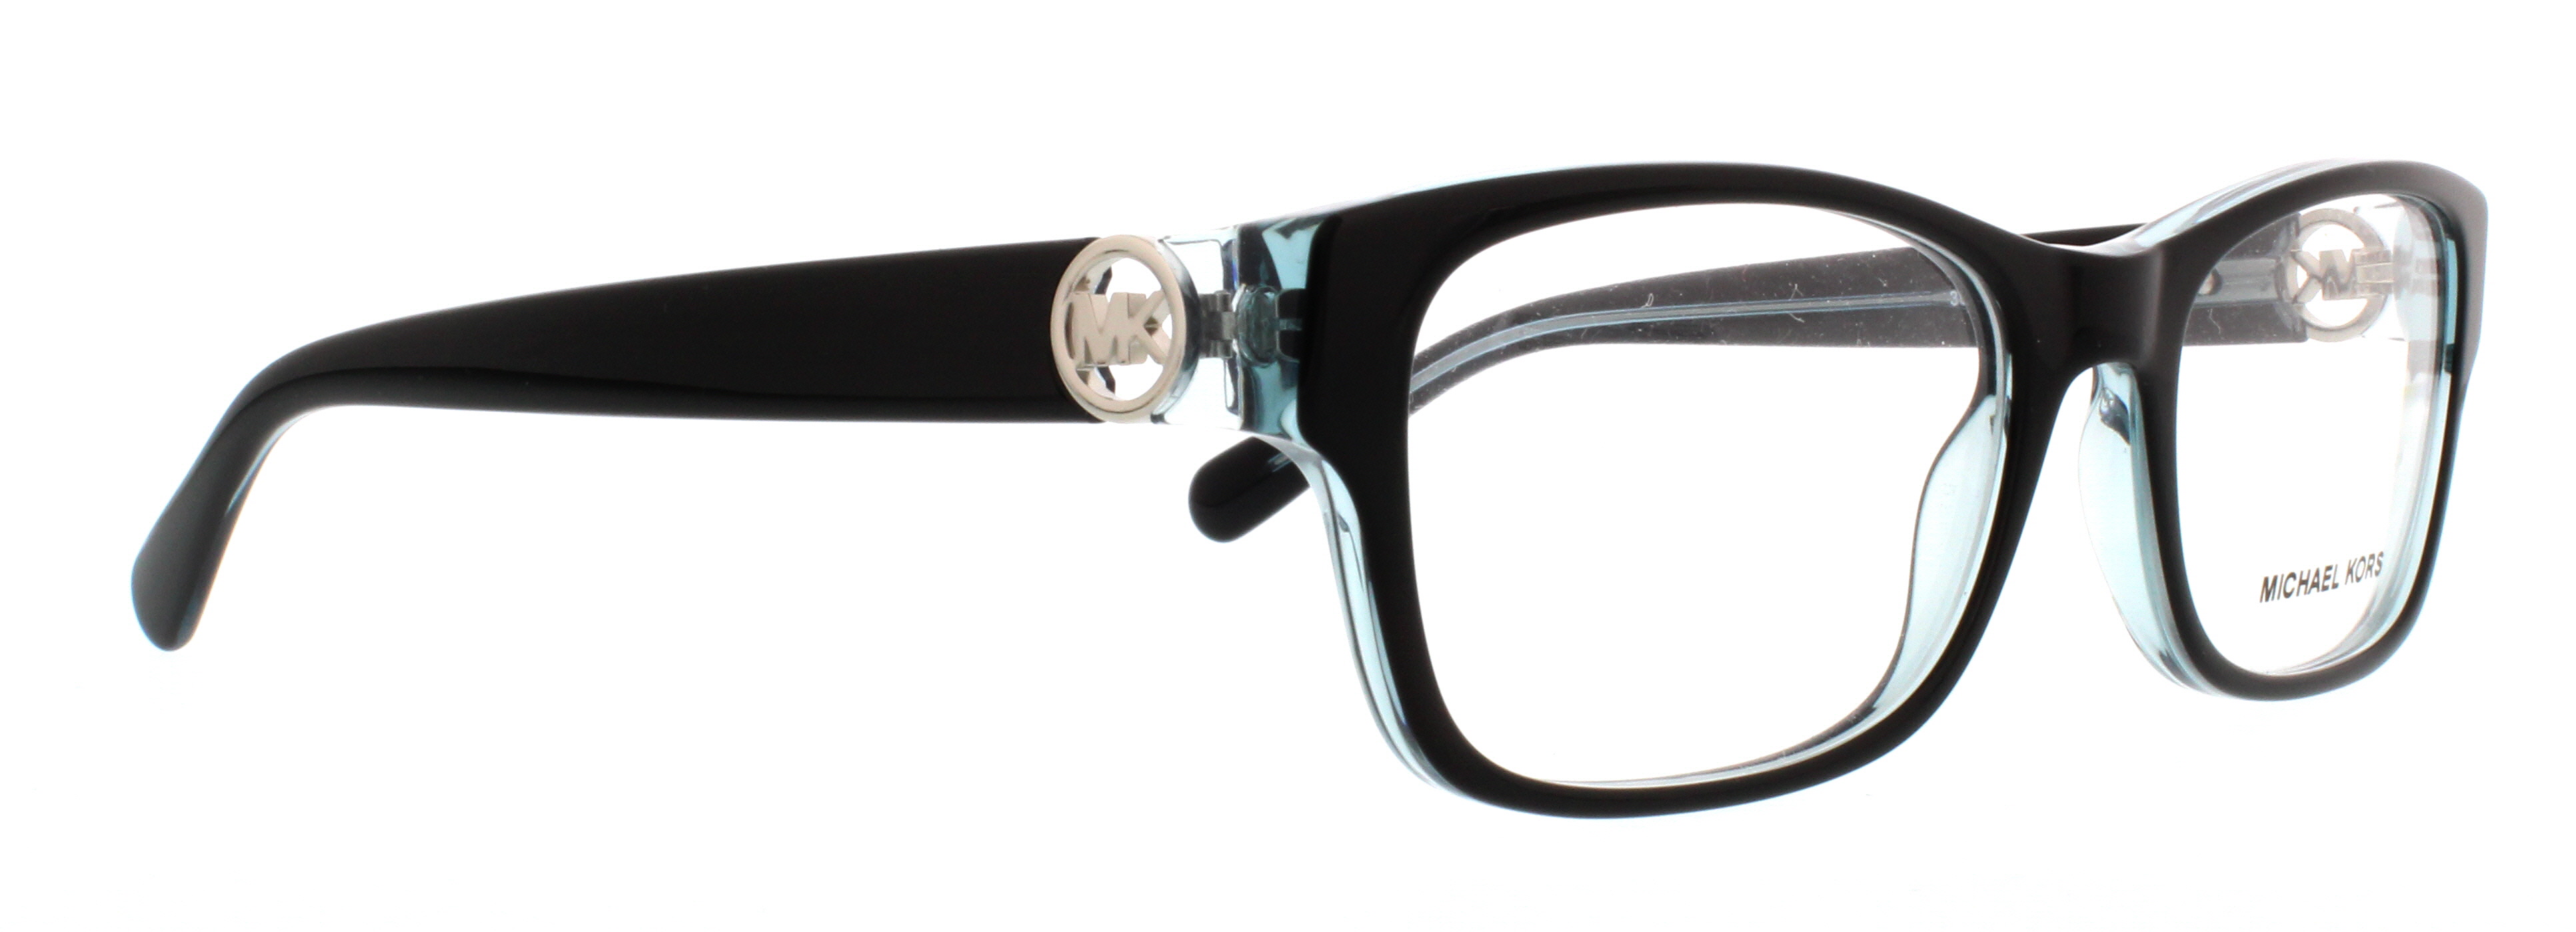 Designer Frames Outlet. Michael Kors Eyeglasses MK8001 Ravenna